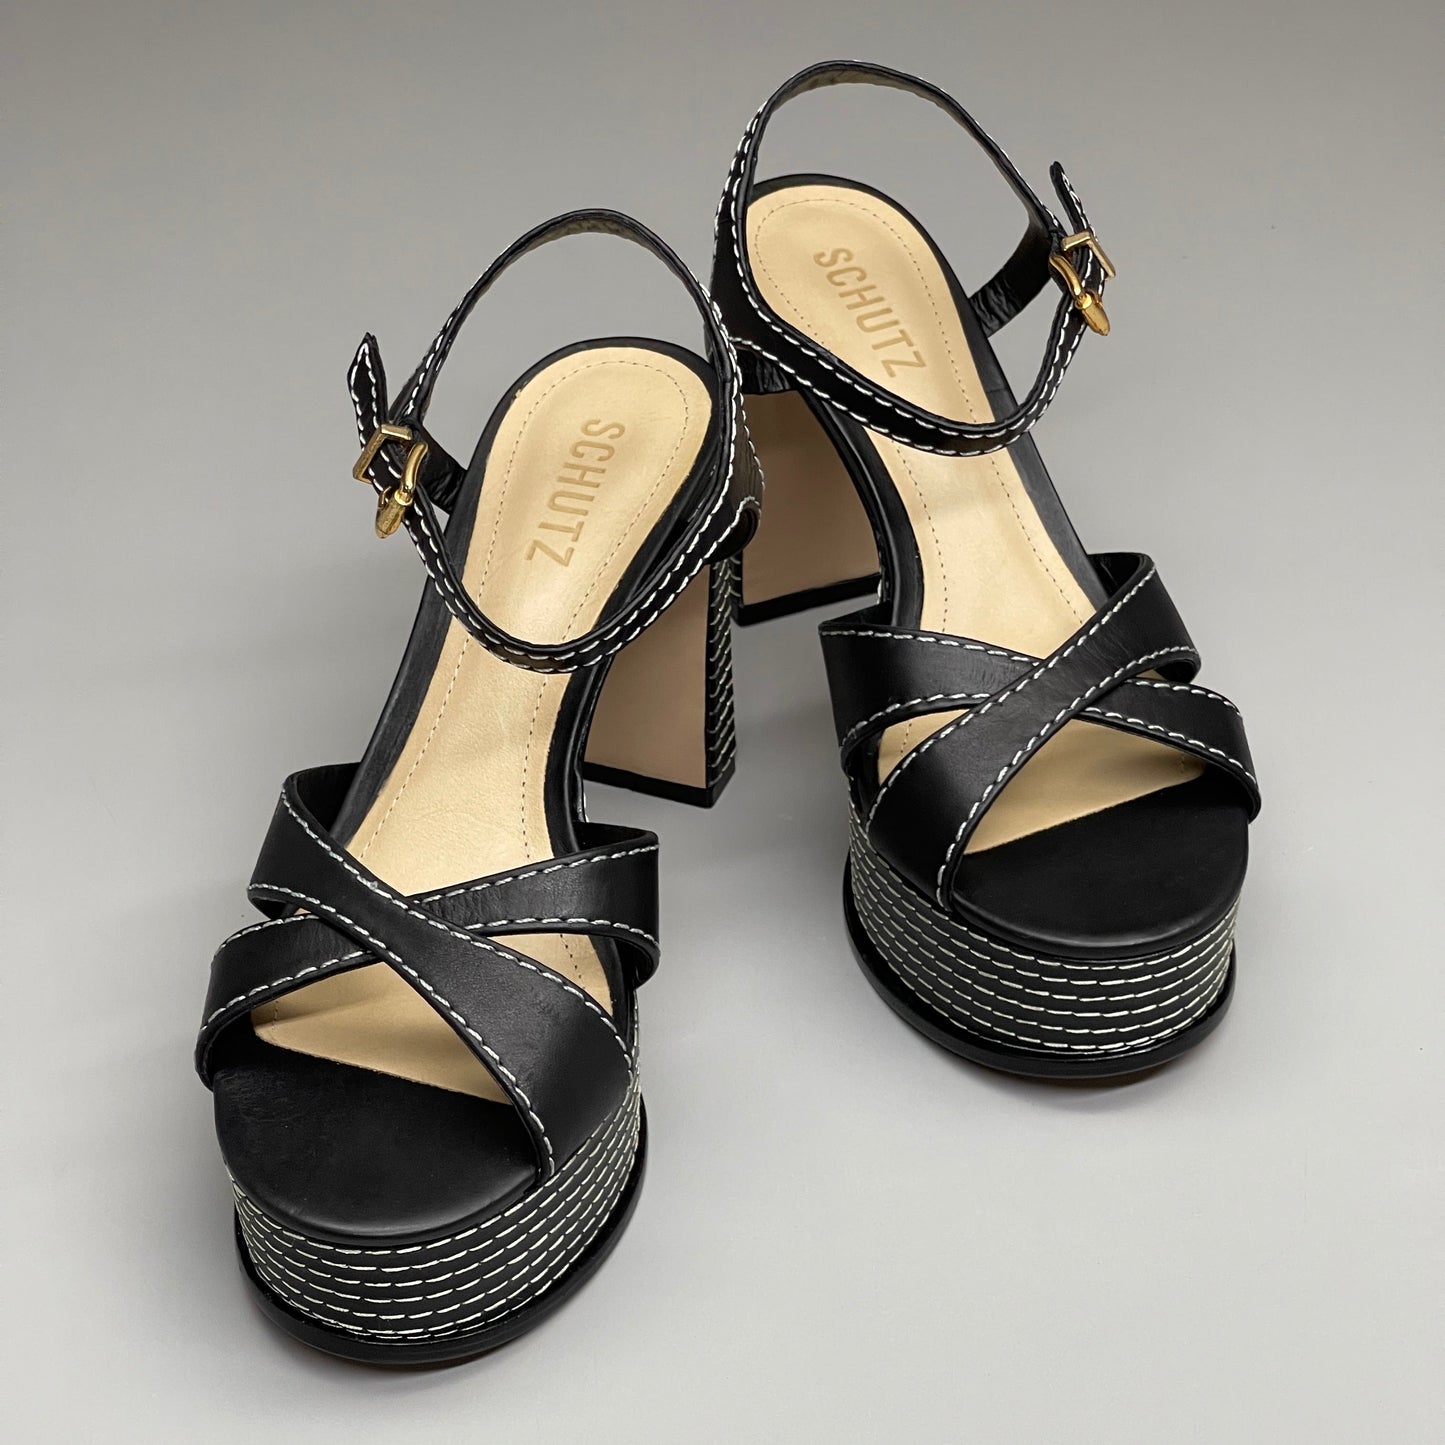 SCHUTZ Keefa Casual Women's Leather Sandal Black Platform 4" Heel Shoes Sz 11B (New)